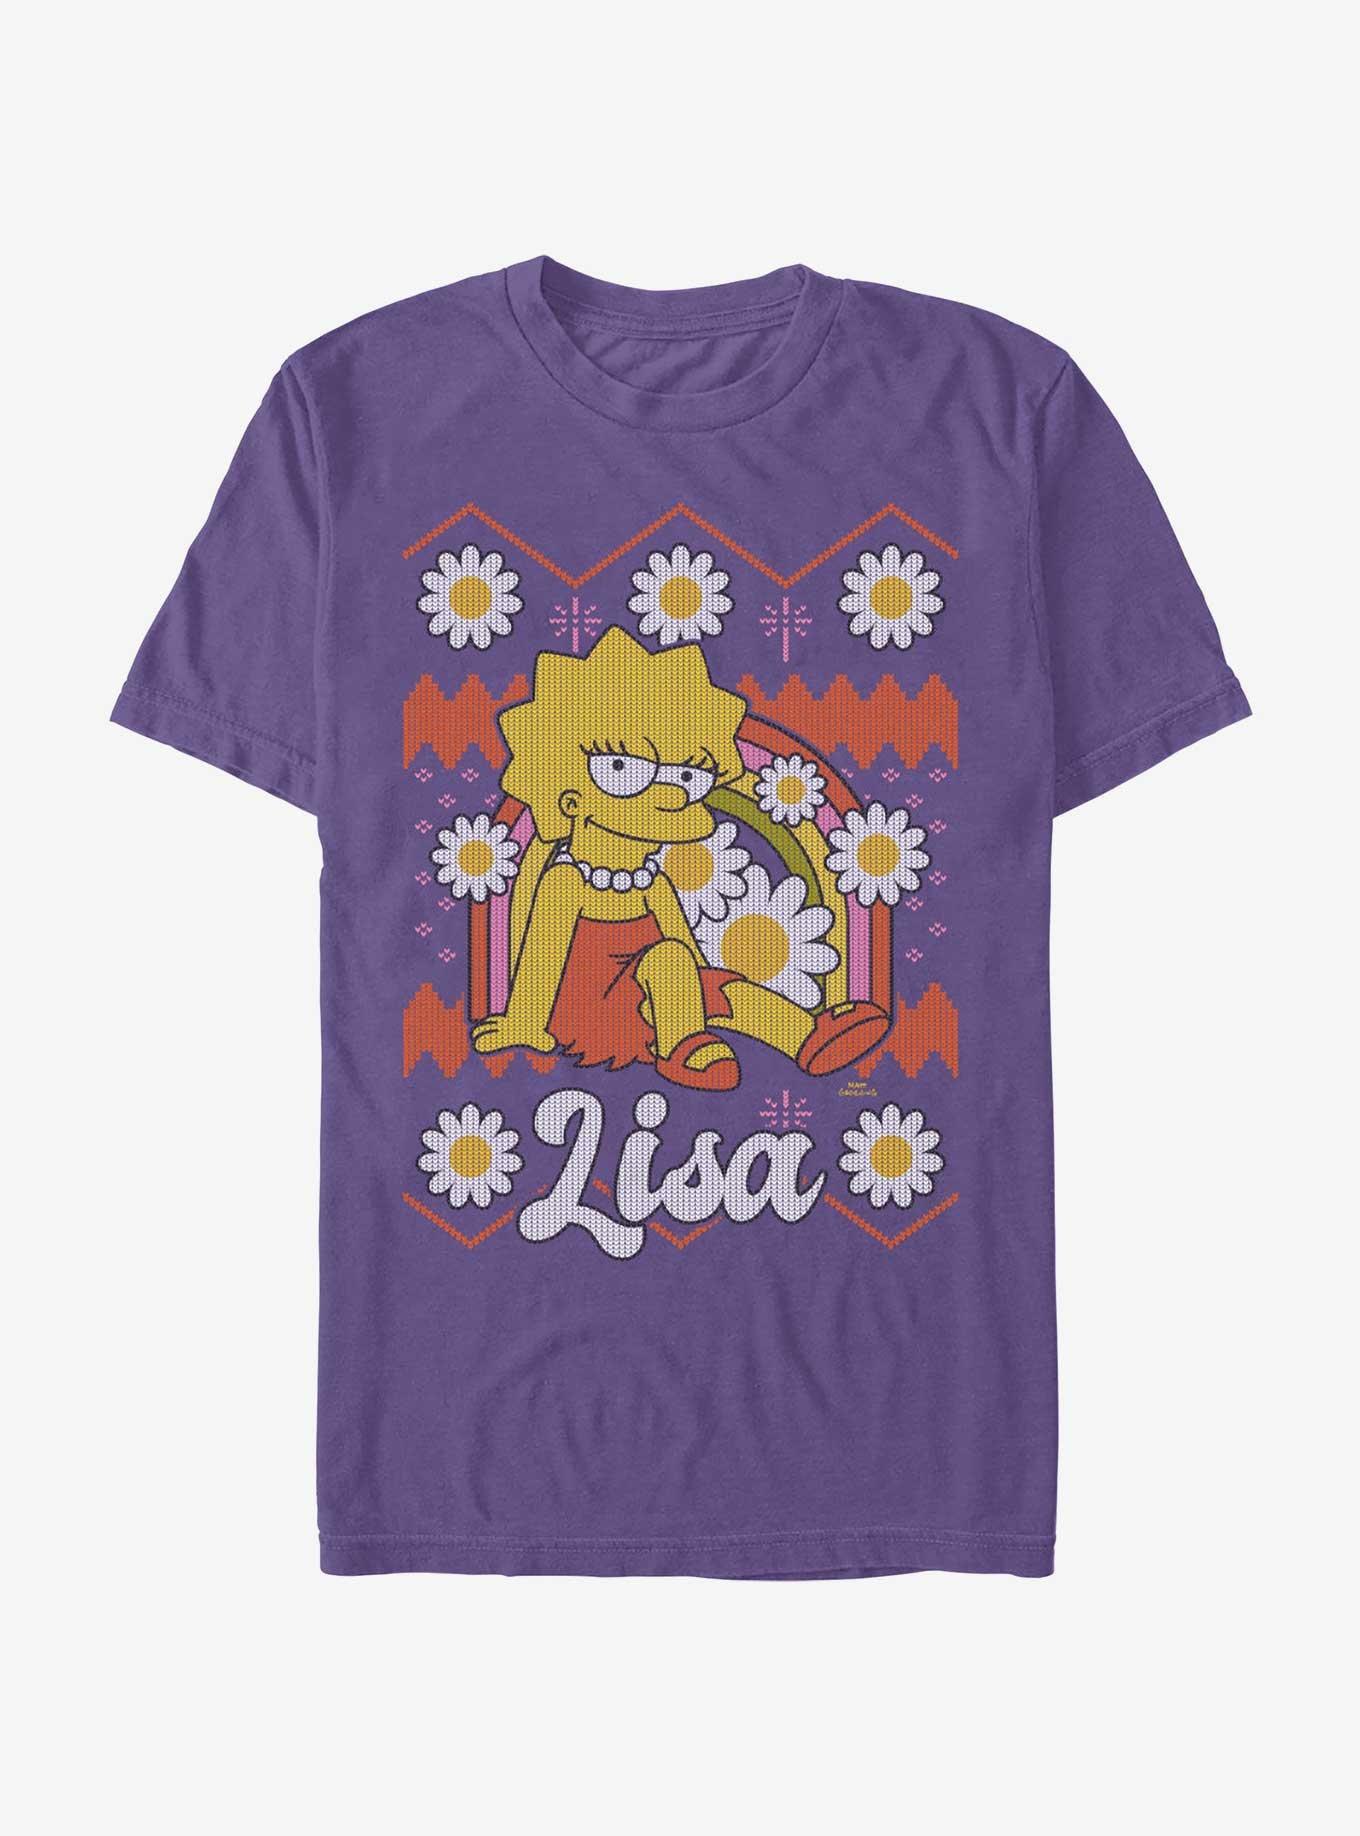 The Simpsons Lisa Floral T-Shirt, , hi-res